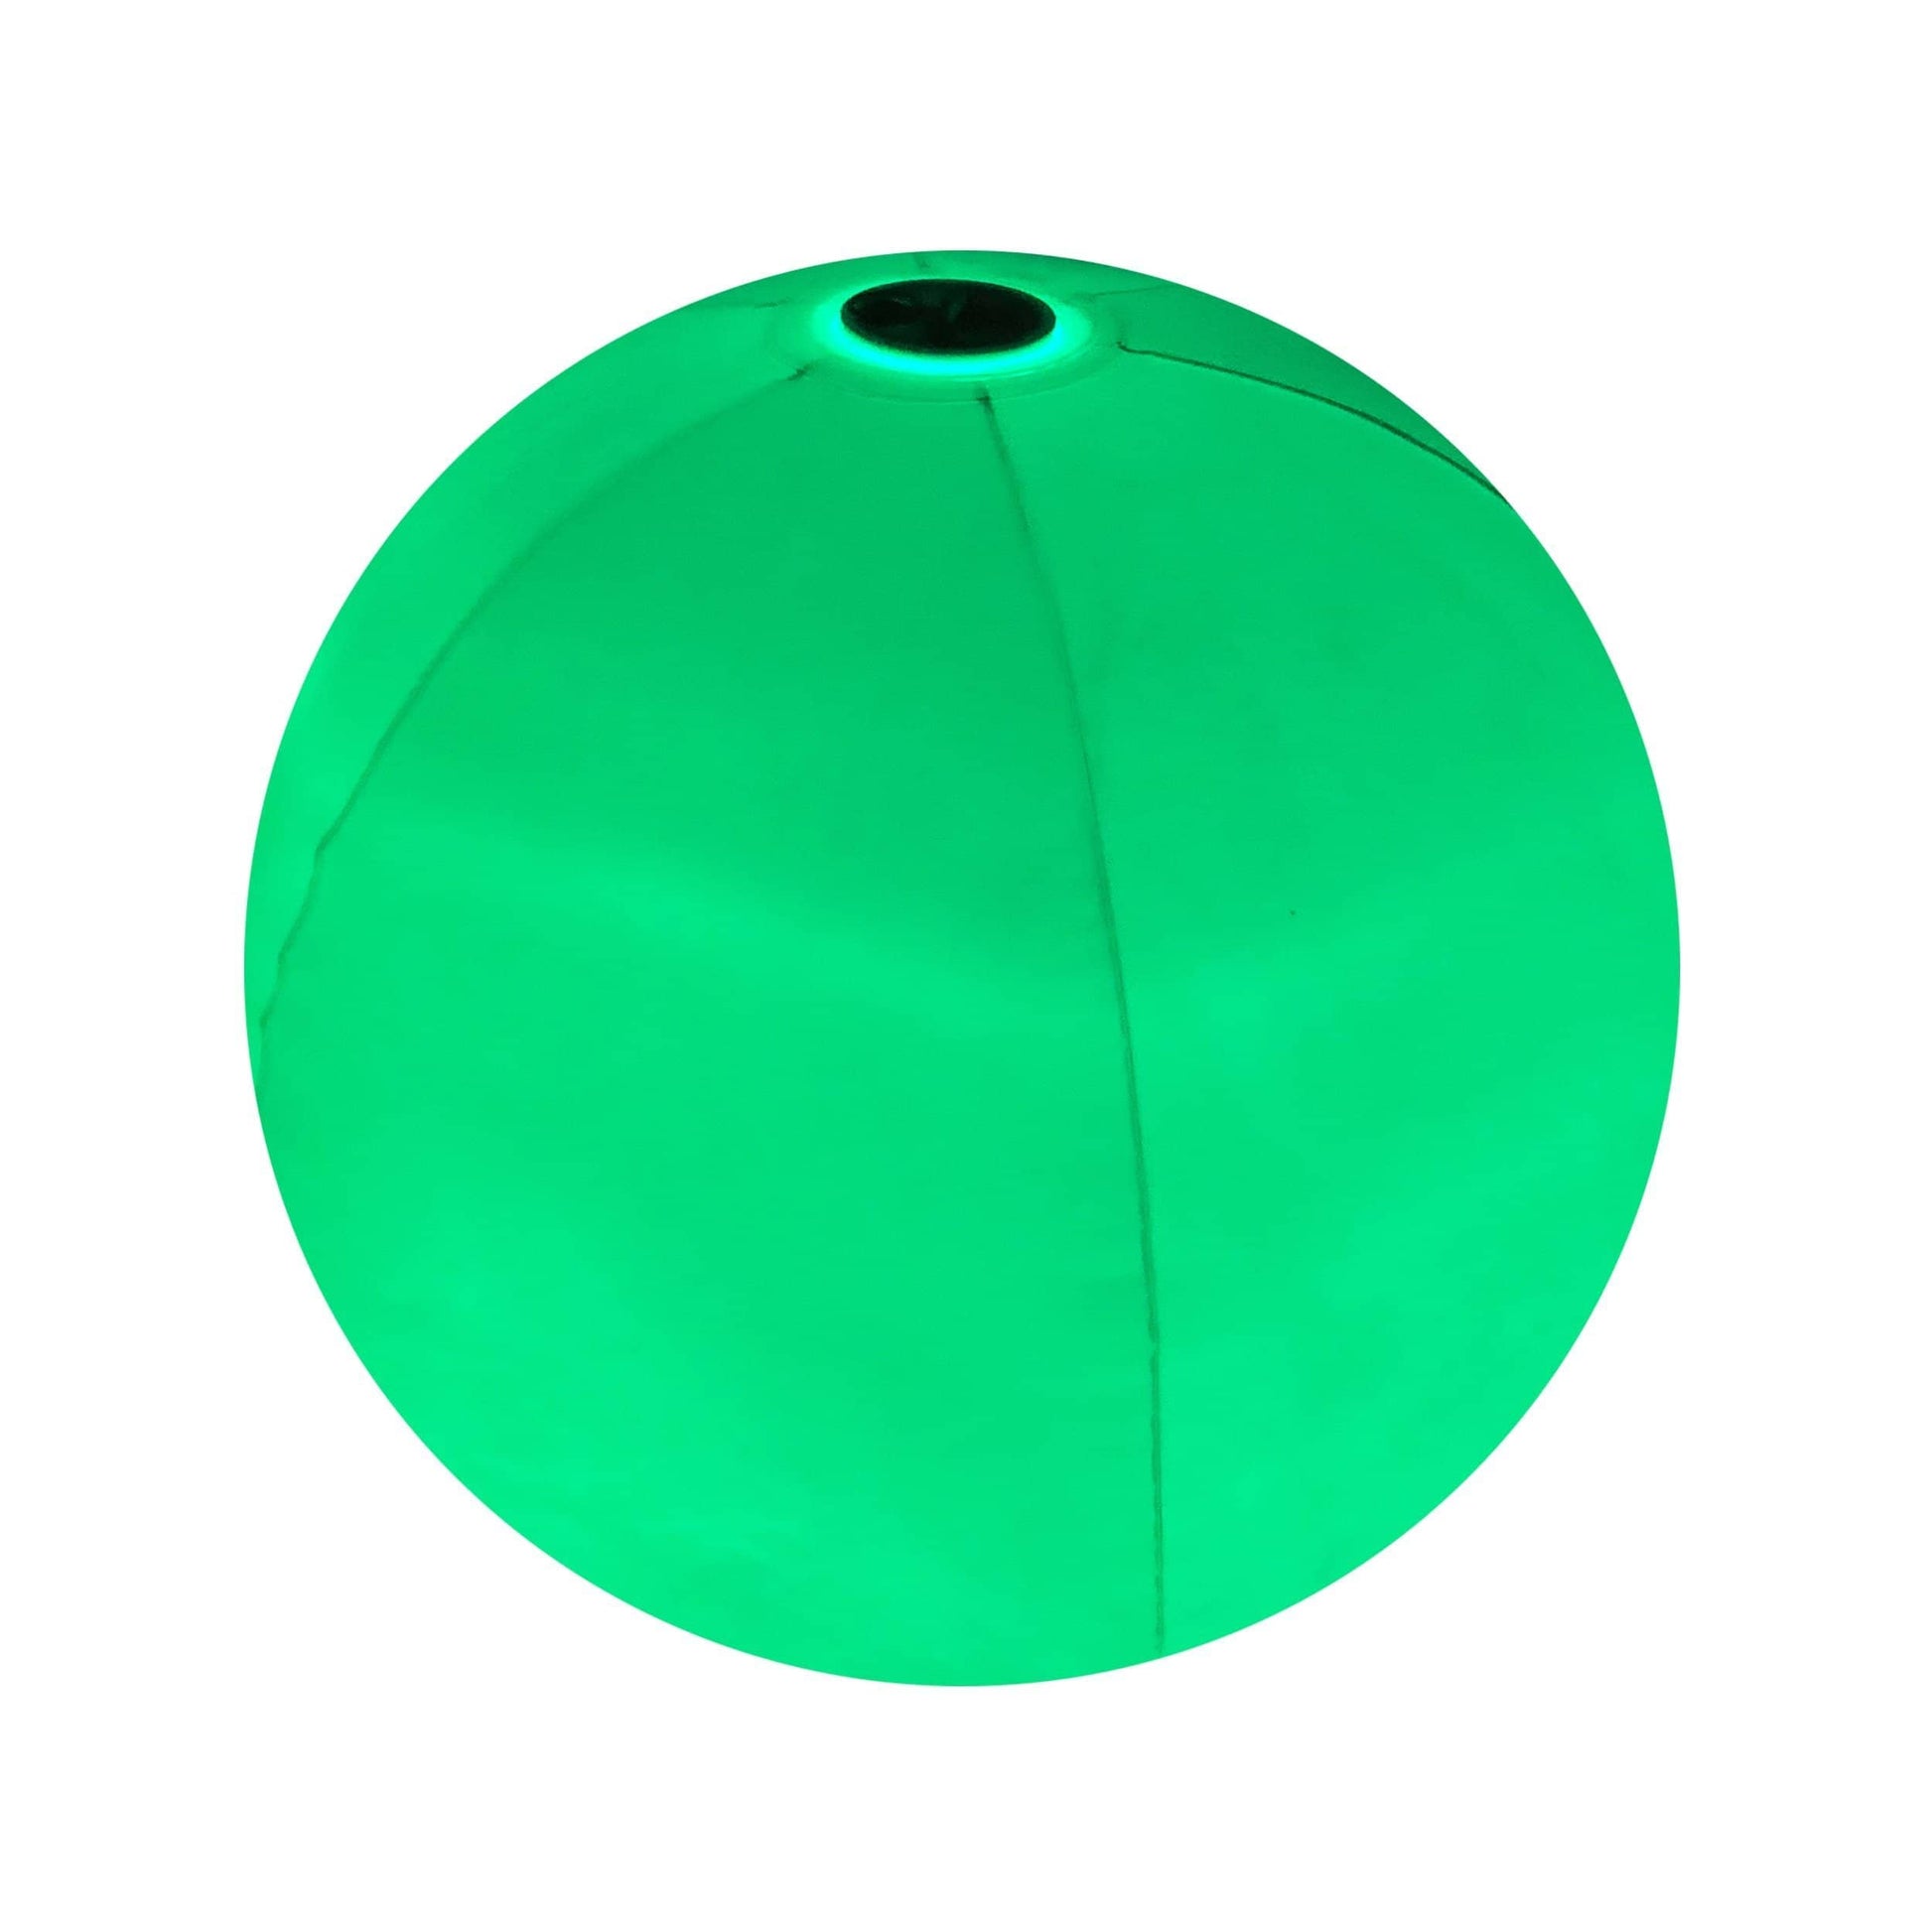 Inflatable Beach Ball Illuminated LED PoolCandy